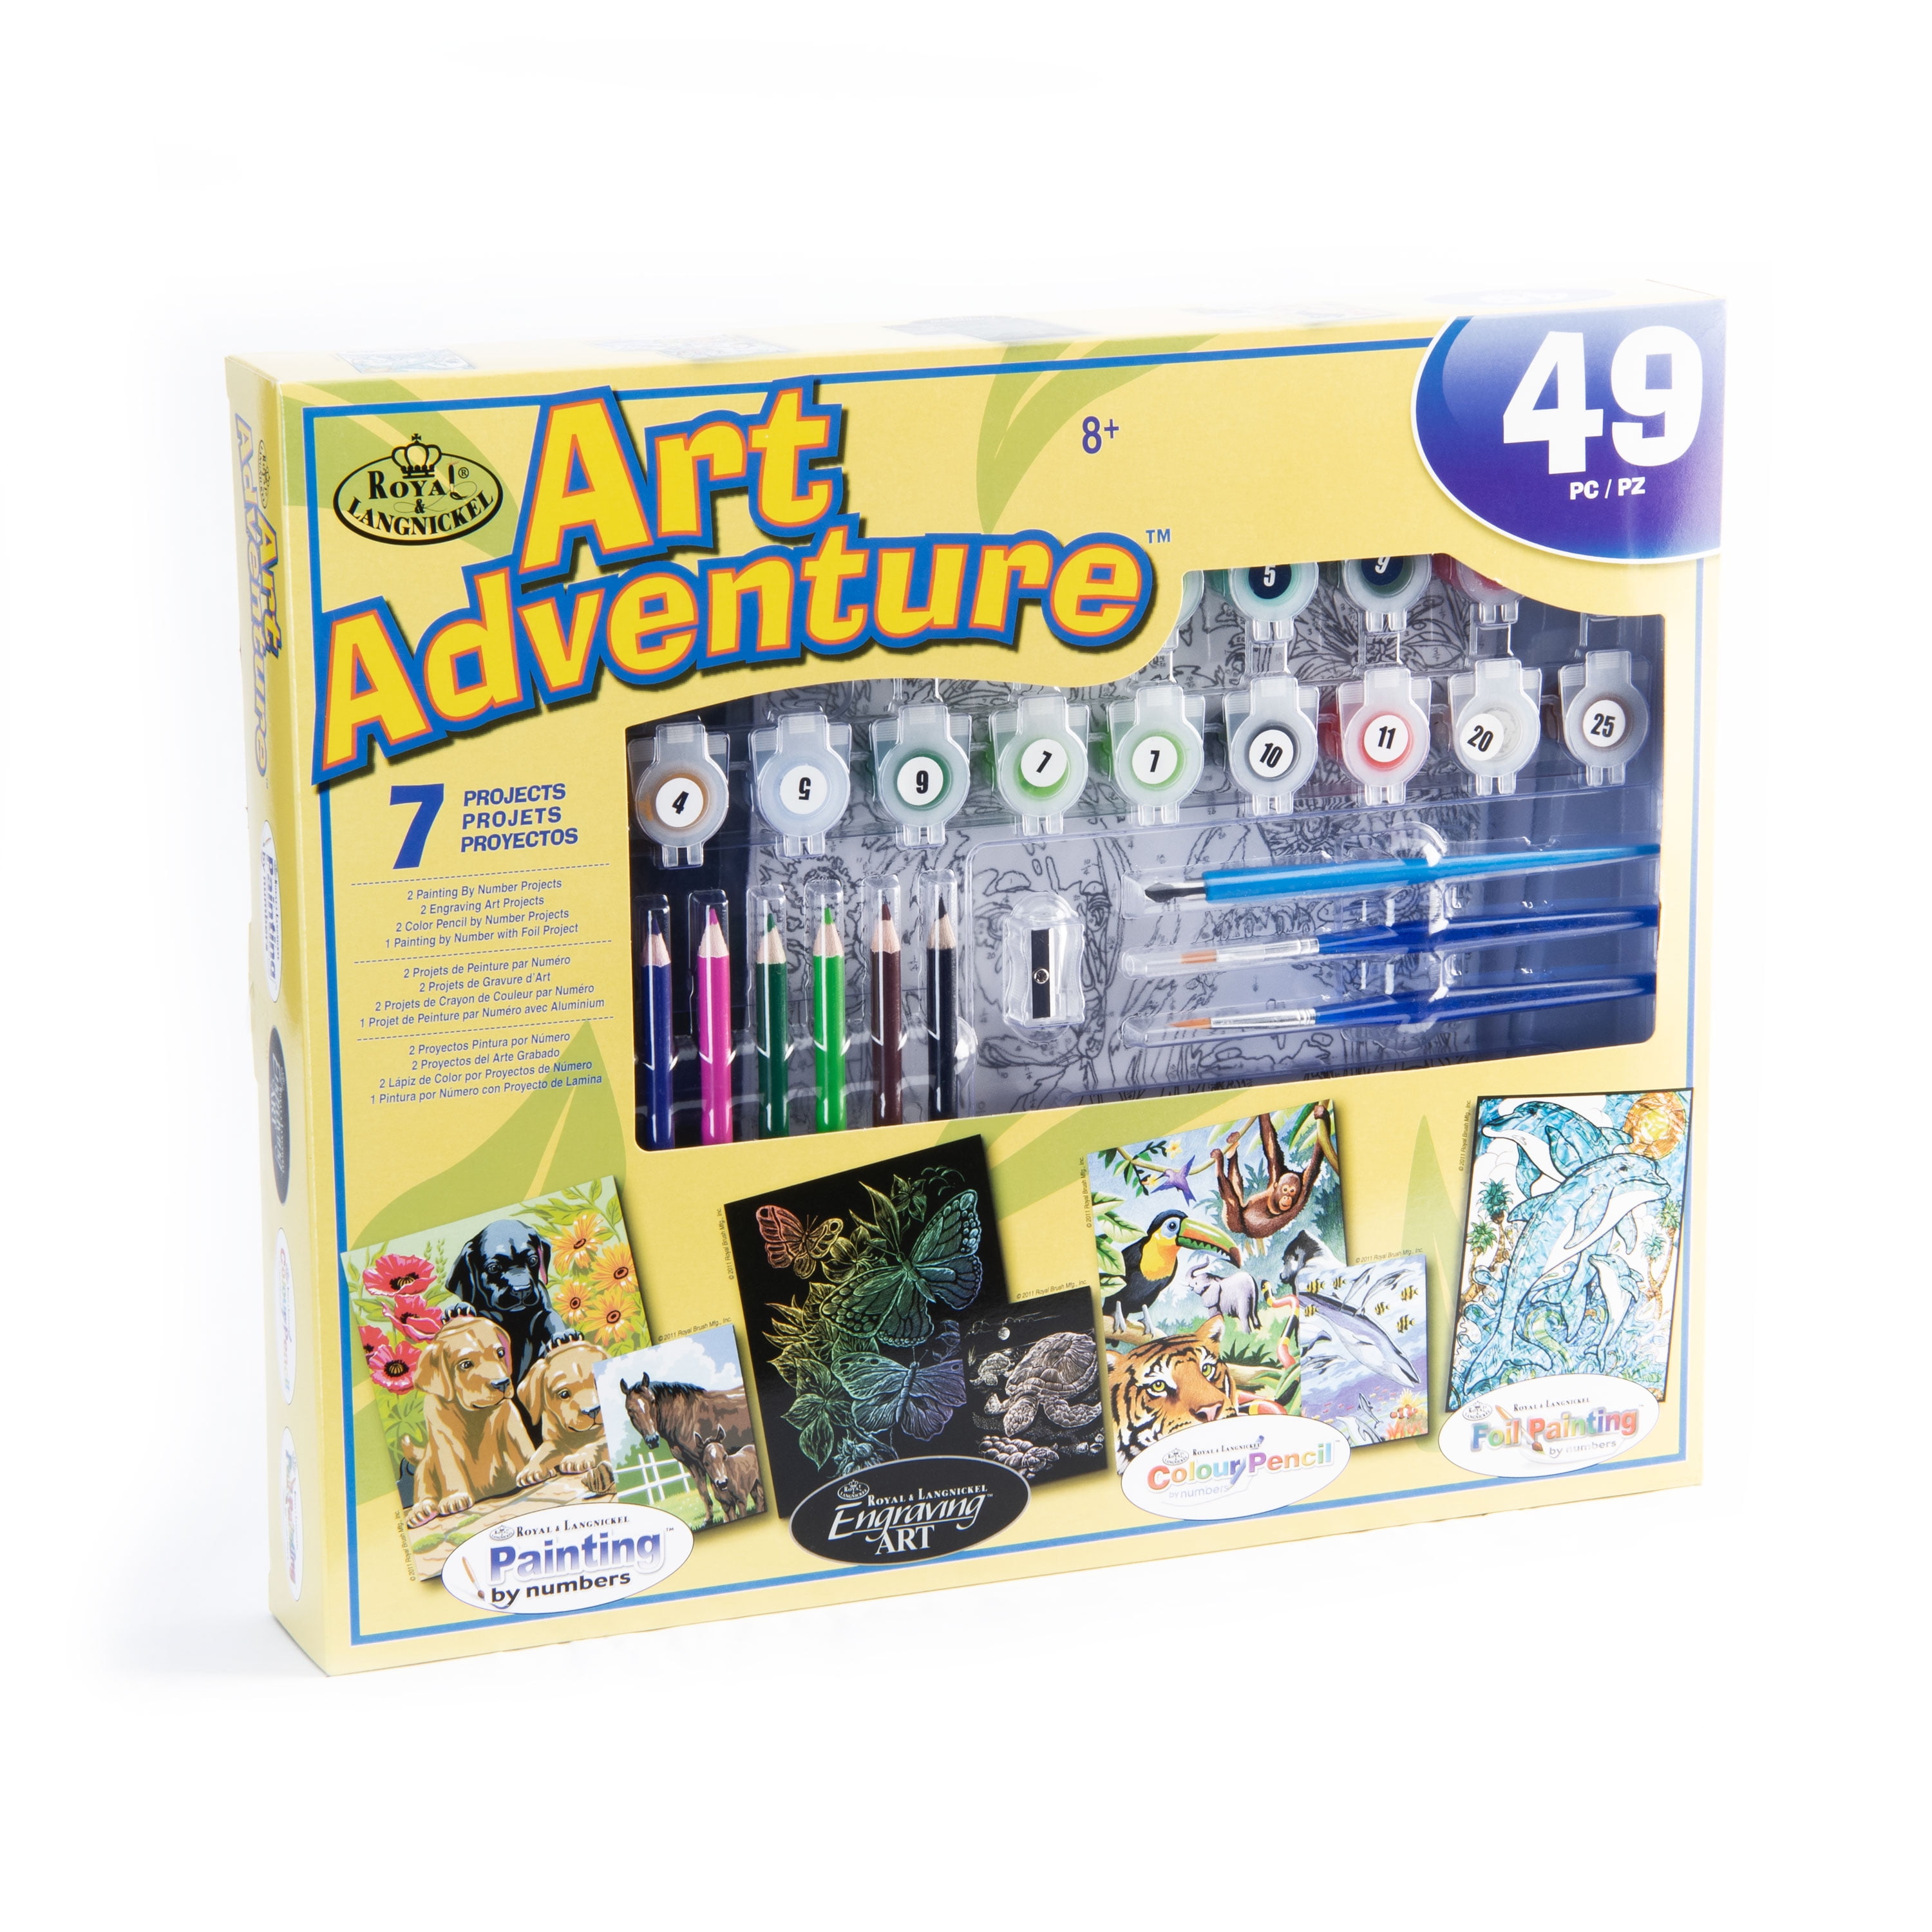 Crayola Masterworks Art Case, Over 200 Piece, Gift for Kids, Age 4, 5, 6, 7